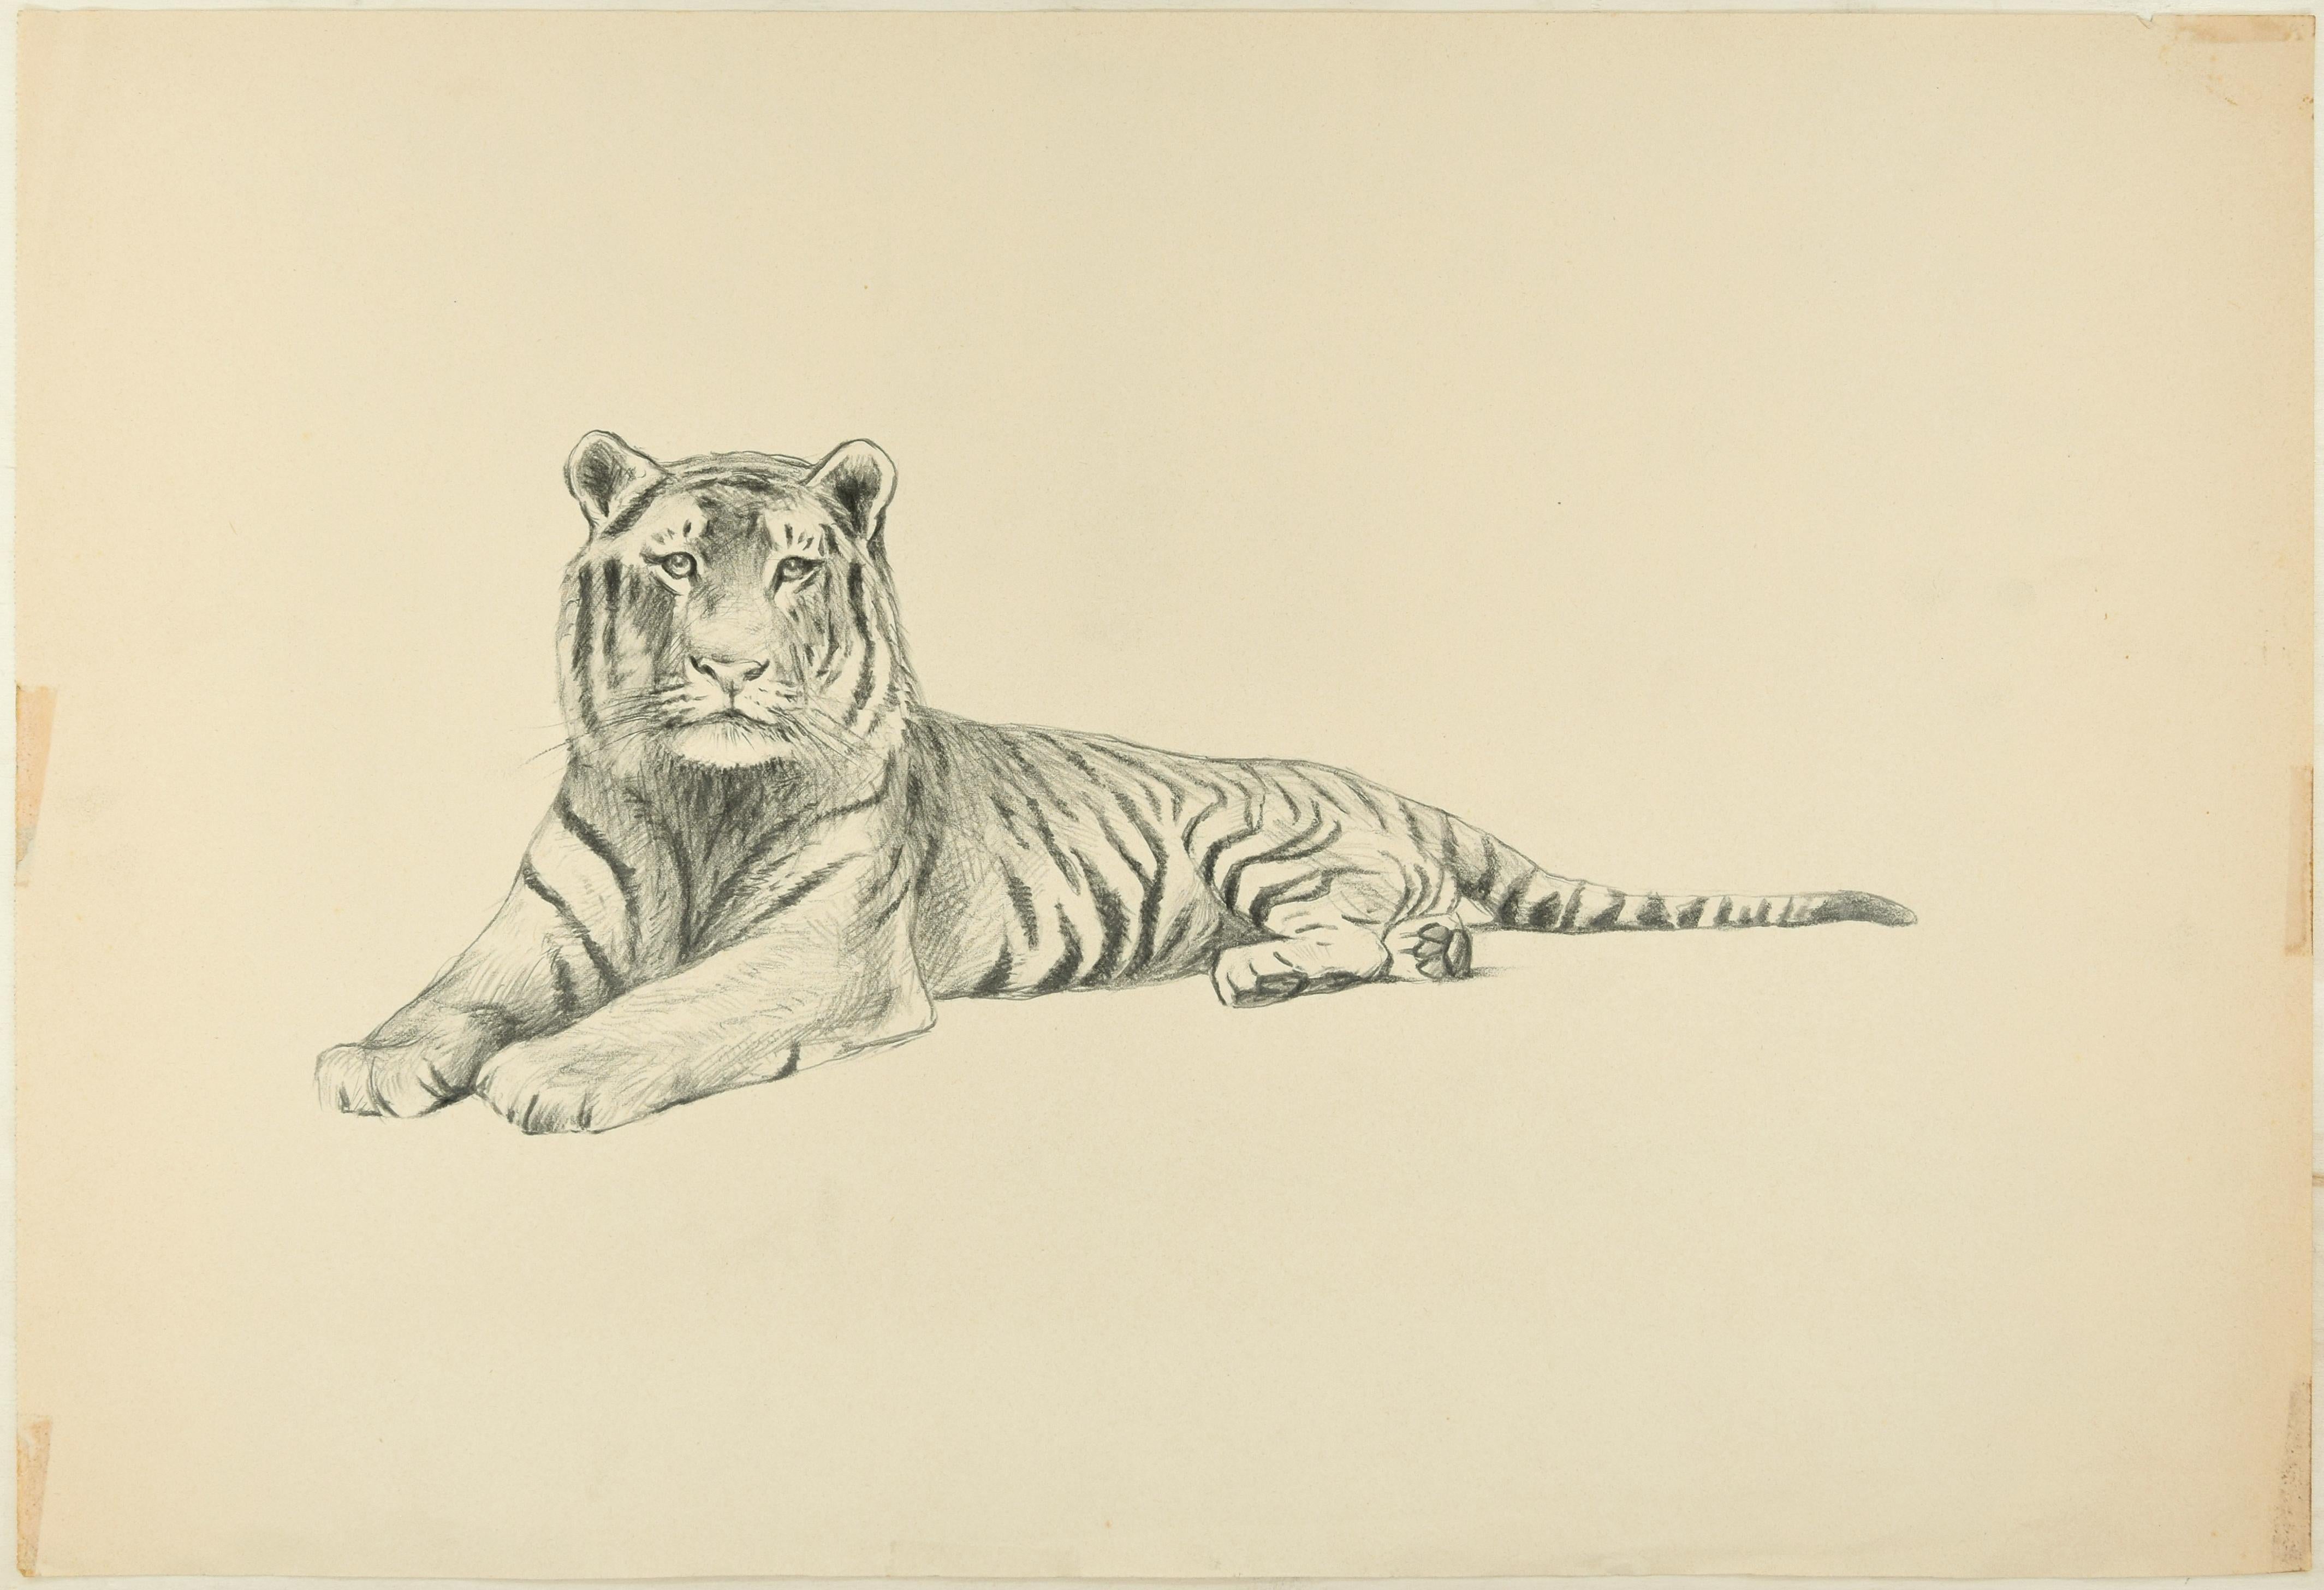 Wilhelm Lorenz Figurative Art - Lying Down Tiger - Original Pencil Drawing by Willy Lorenz - 1950s